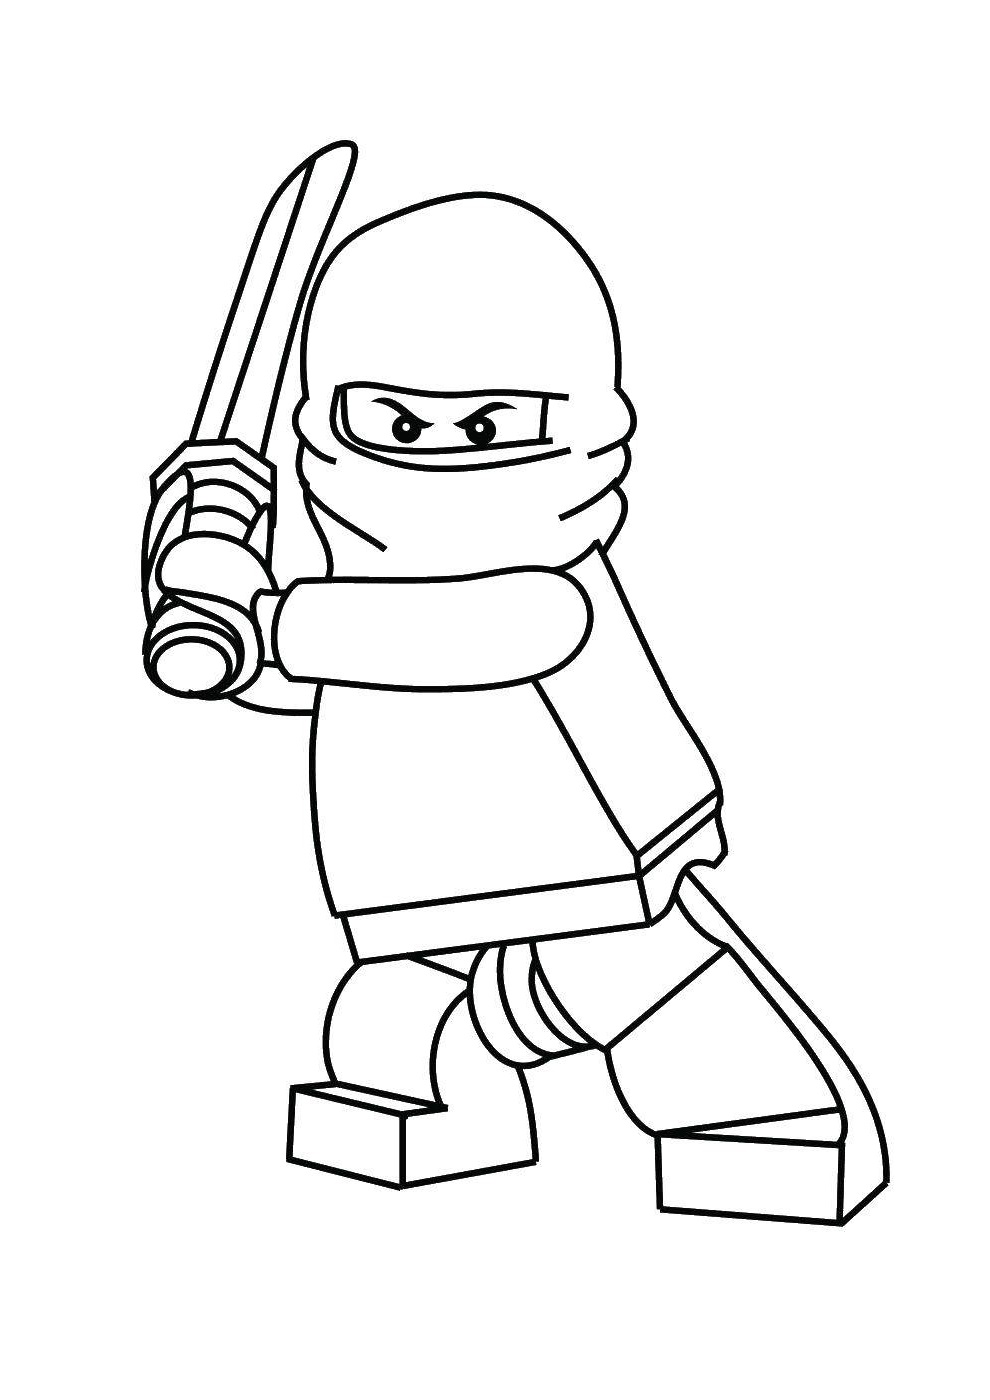 Название: Раскраска Ниндзя с мечом. Категория: ниндзя. Теги: Ниндзя, конструктор, Лего.